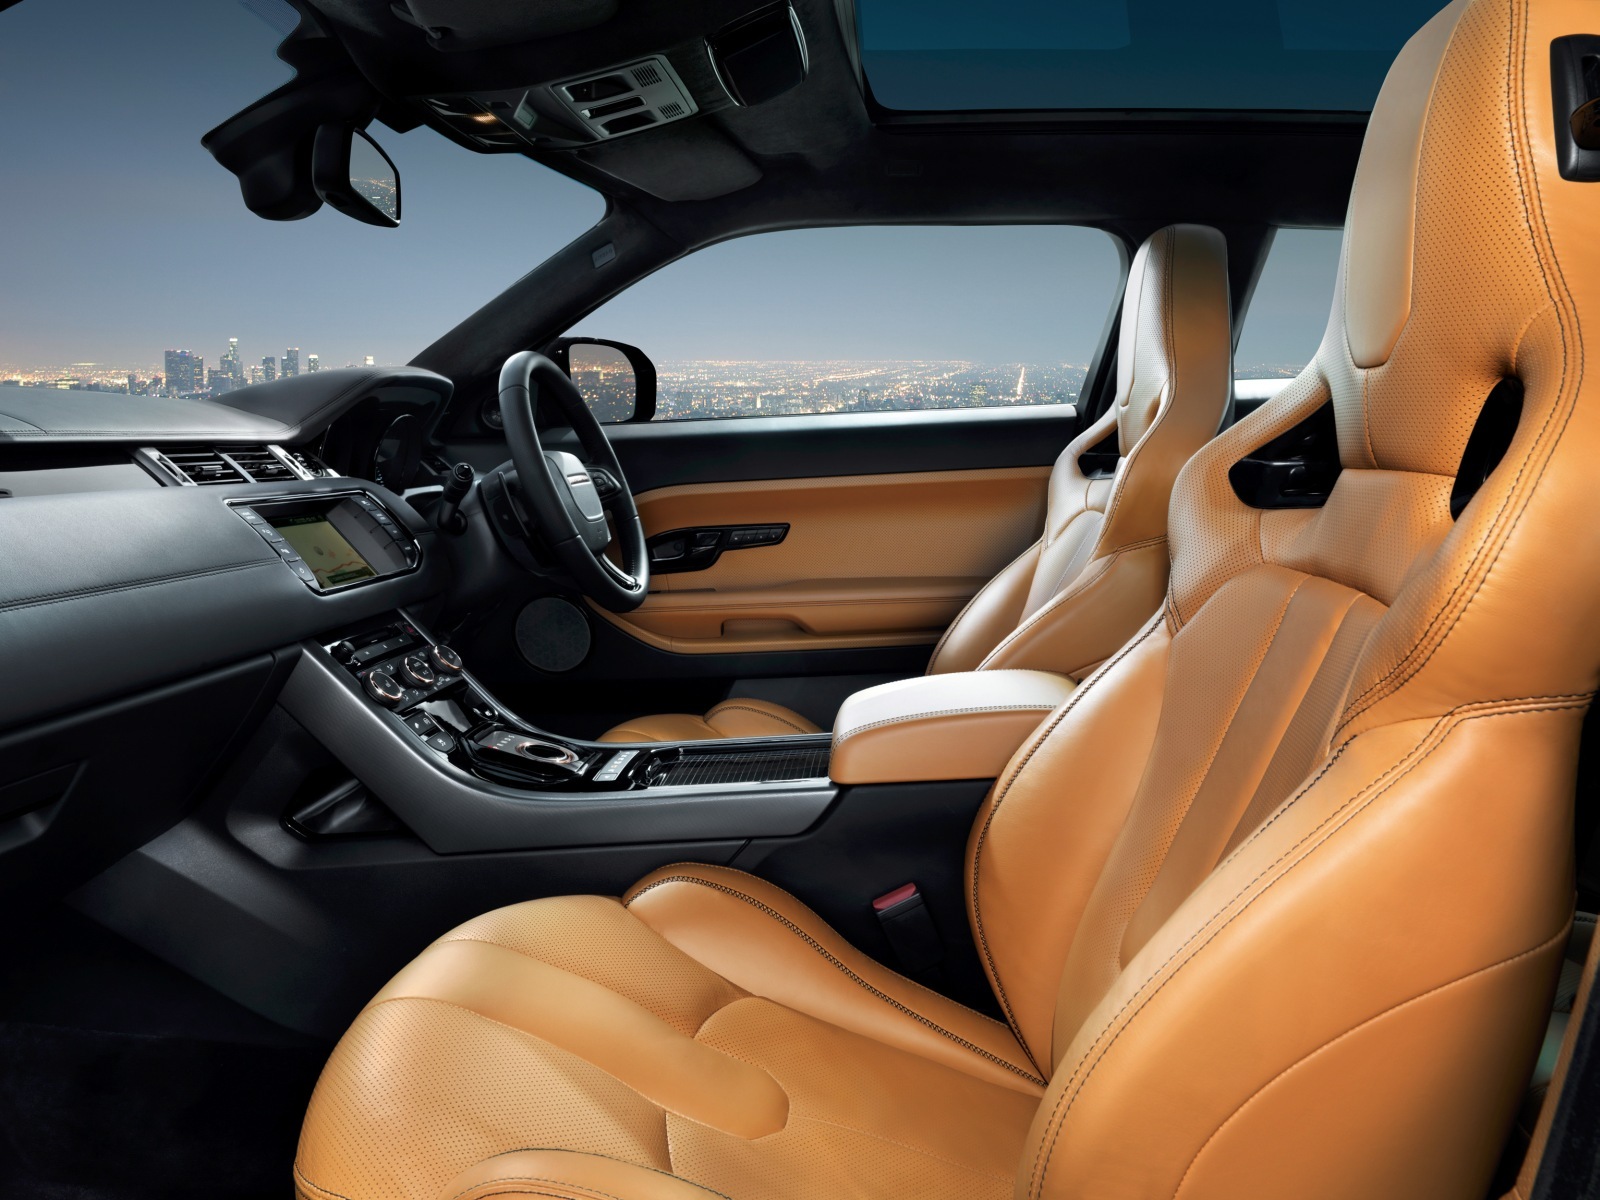 Interior foarte luxos pentru Range Rover Evoque with Victoria Beckham